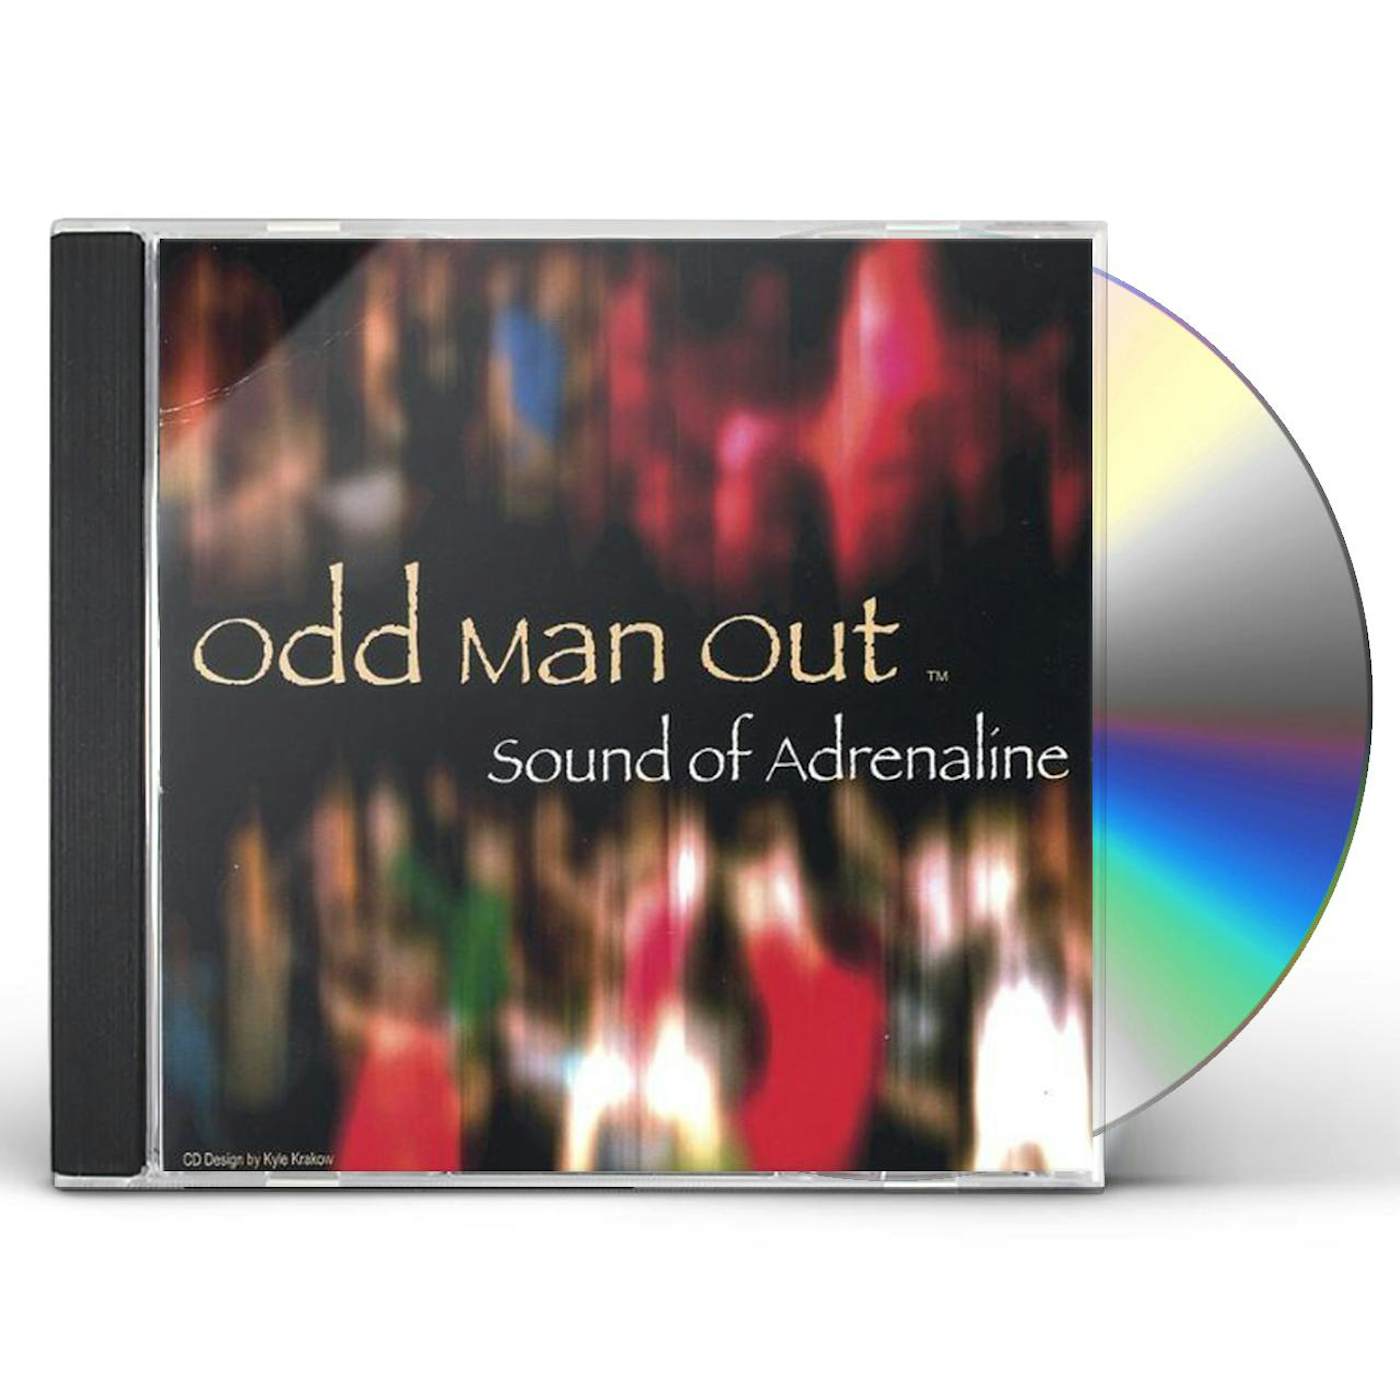 Odd Man Out SELF-DESTRUCTIVE PUPPETS TAKE CONTROL CD